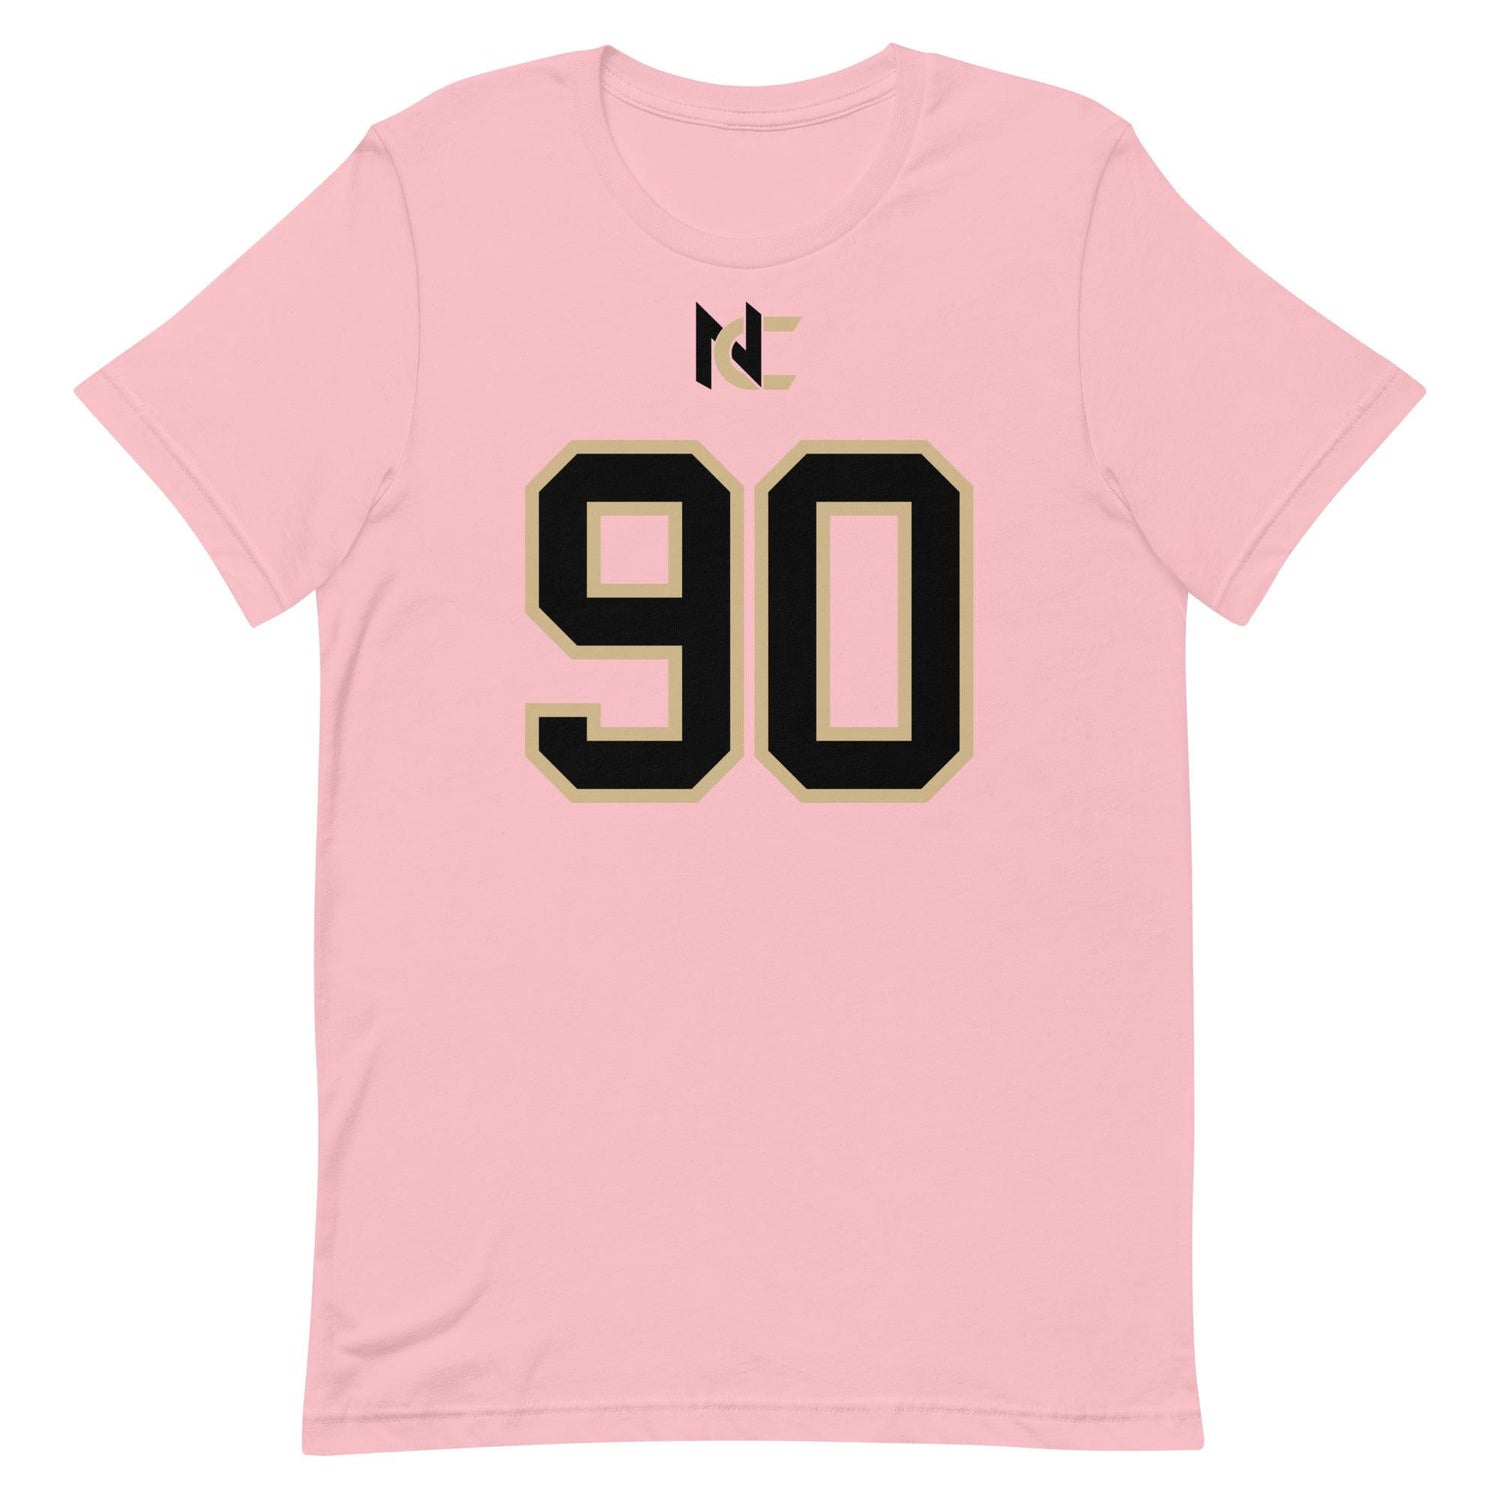 Nate Clifton "Jersey" t-shirt - Fan Arch